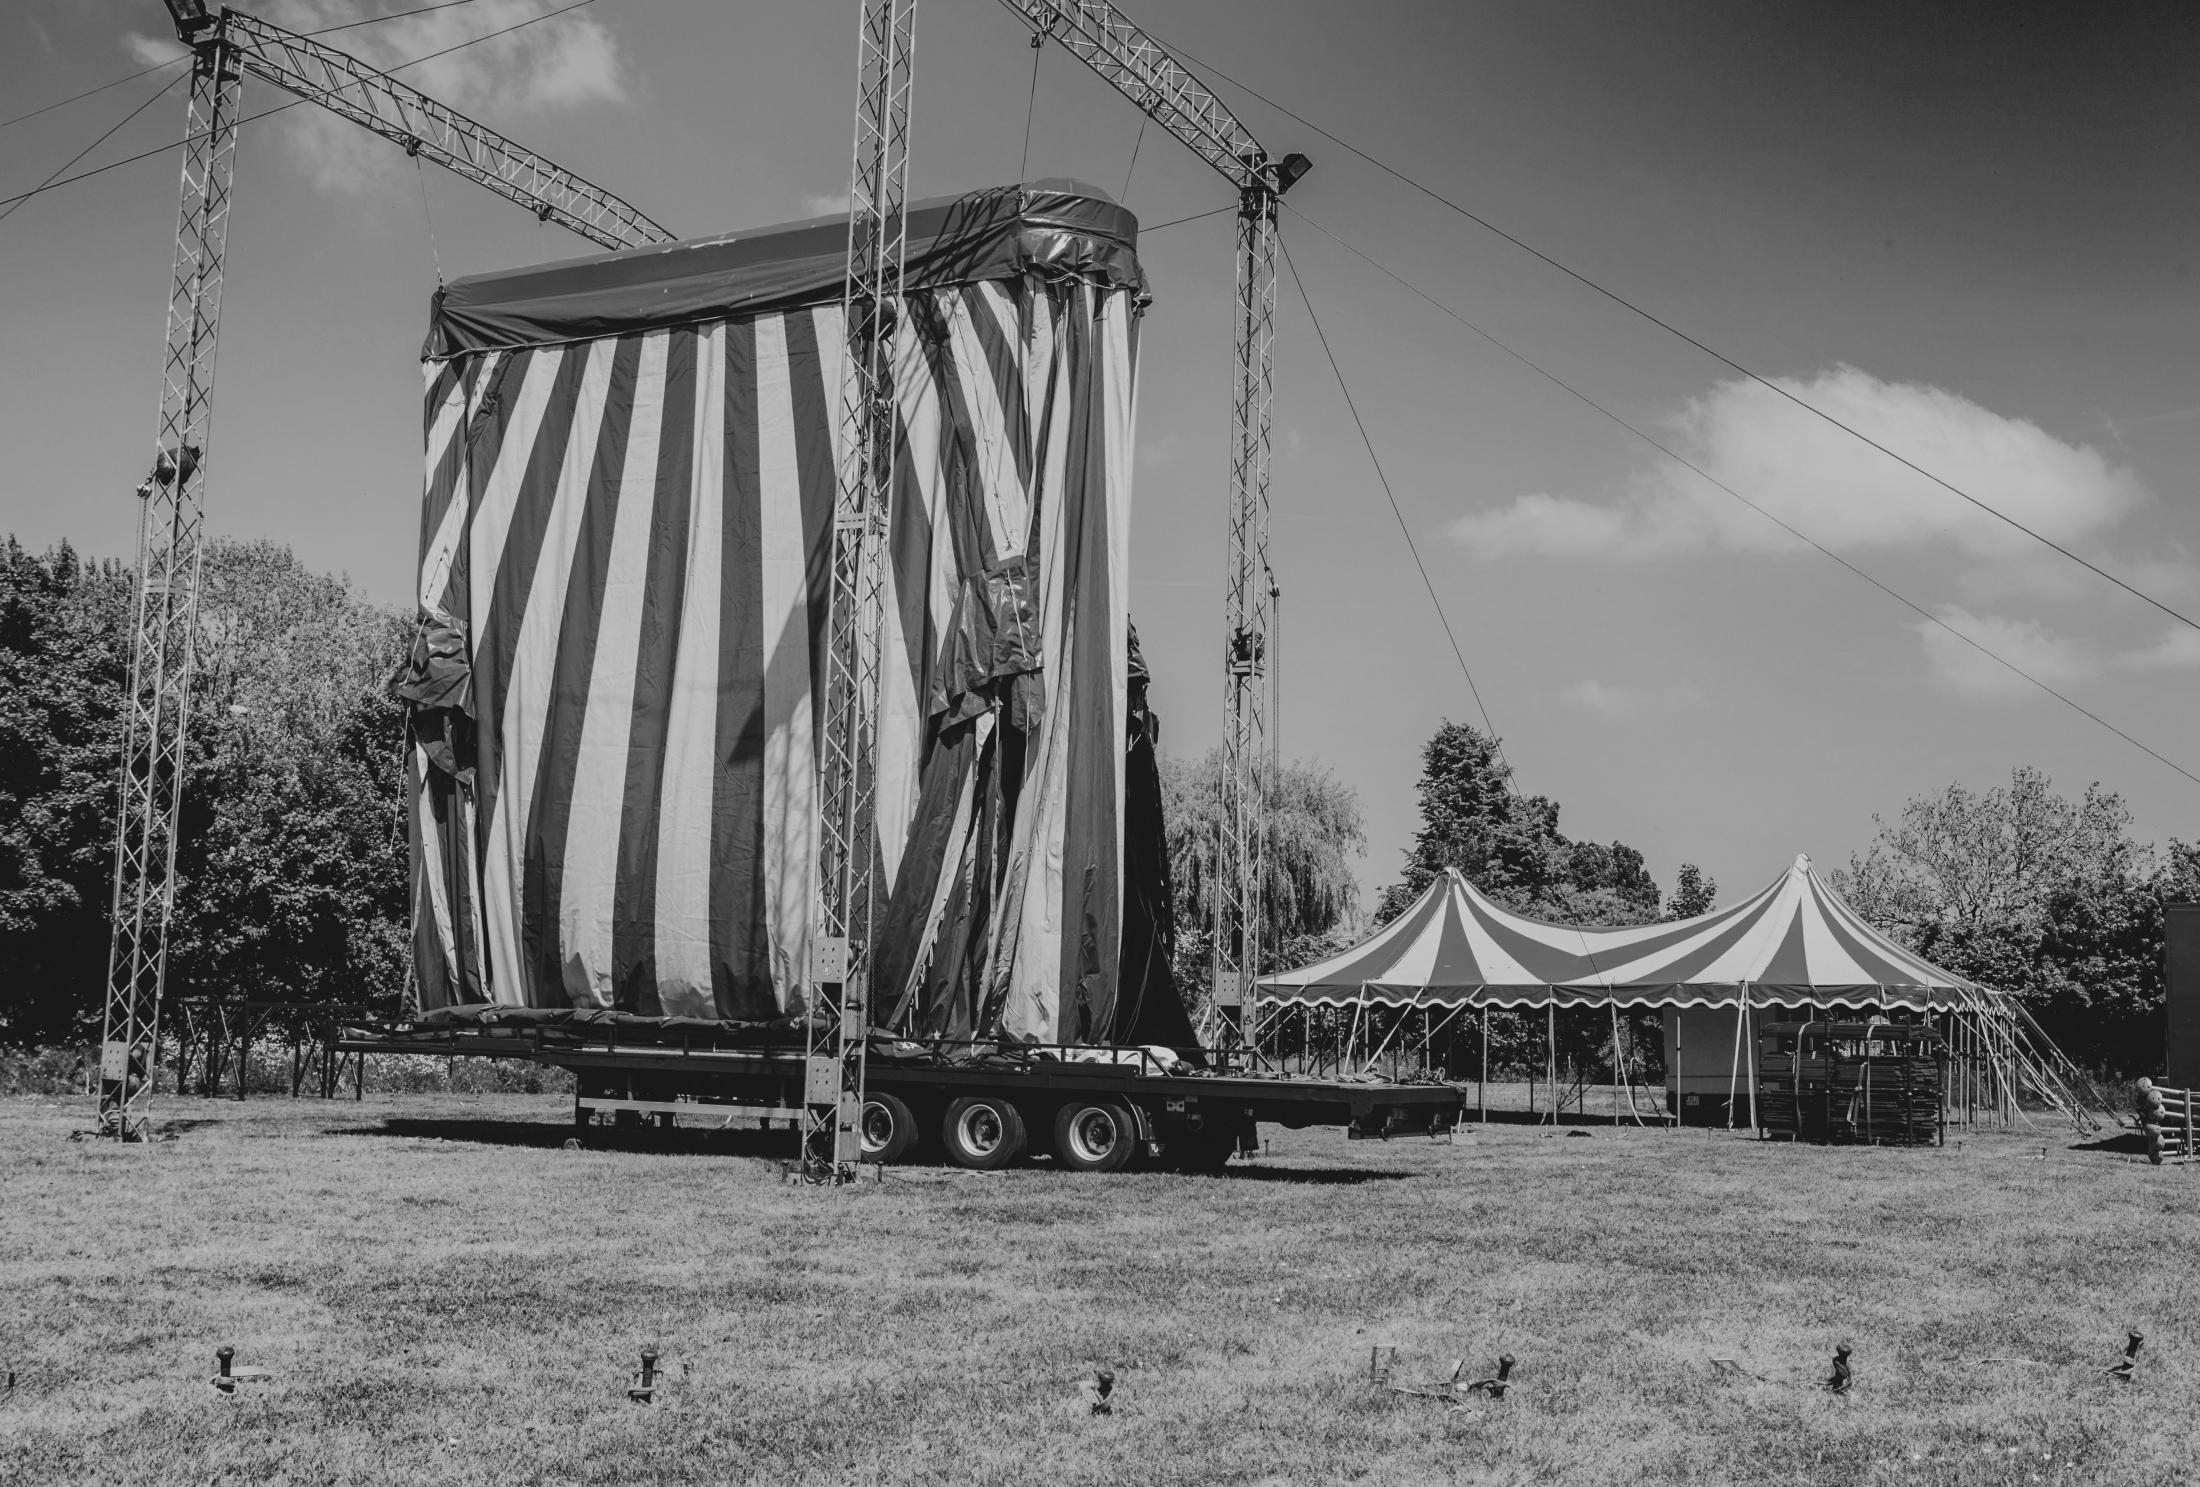 a circus life